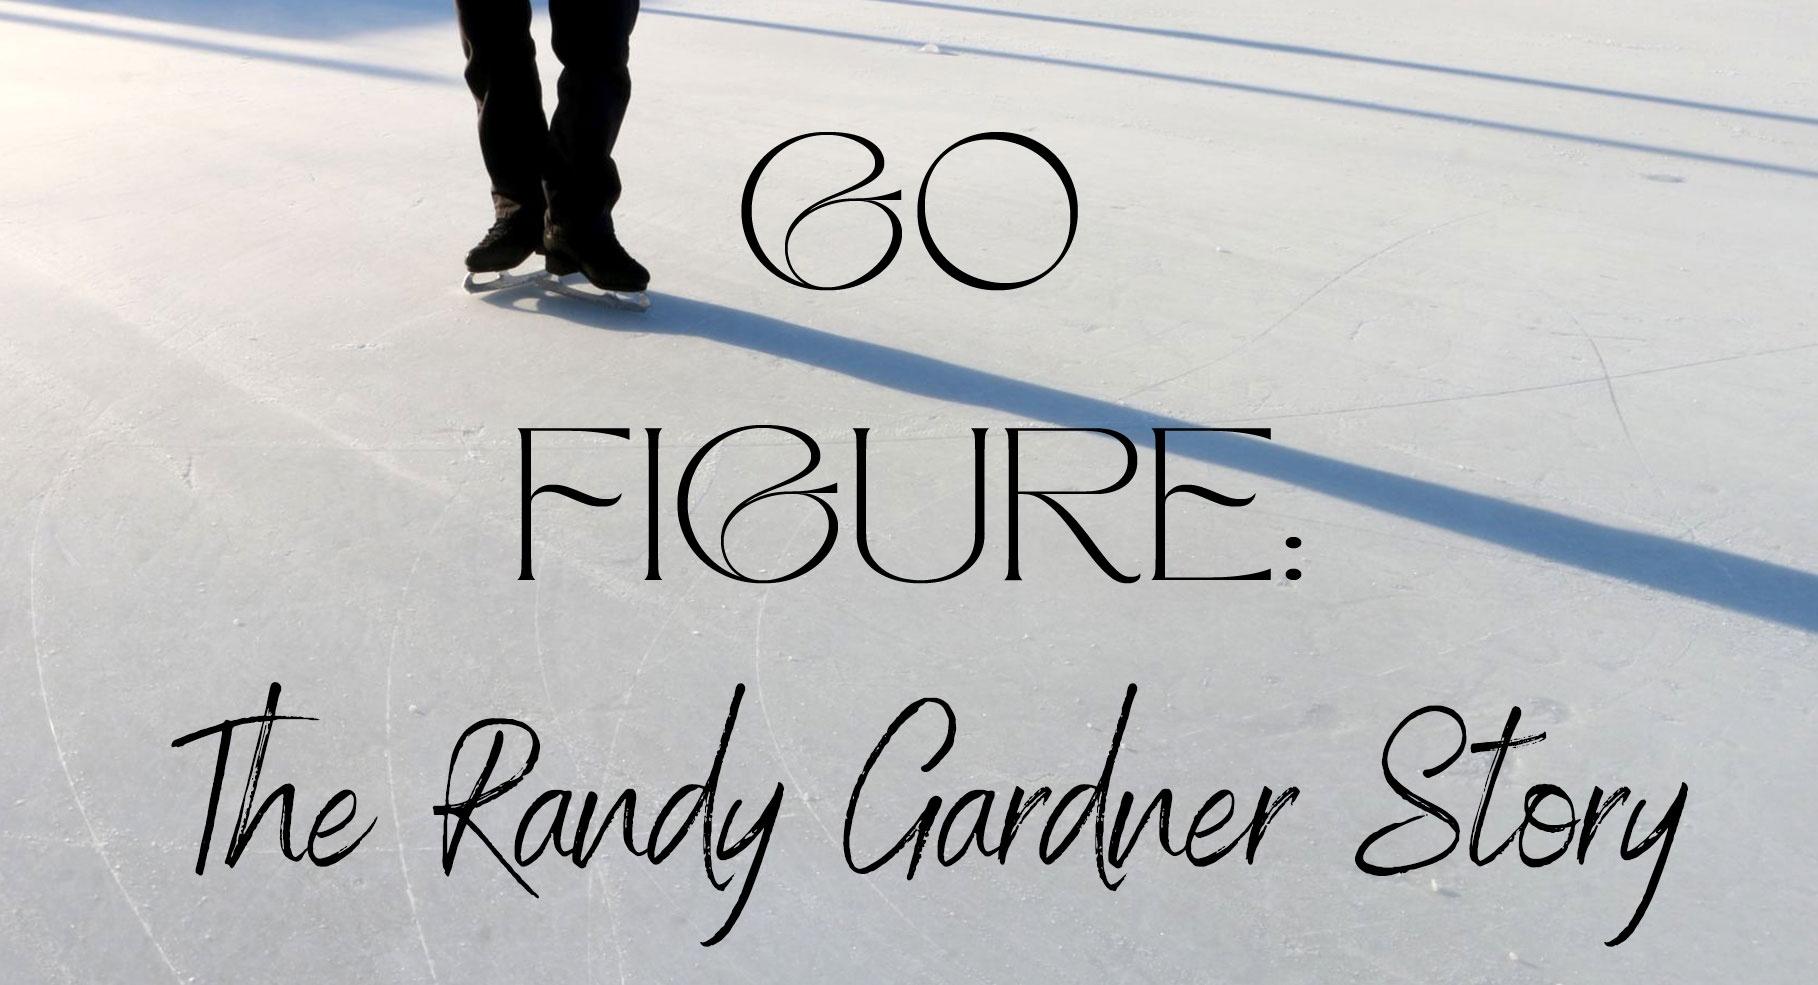 Go Figure The Randy Gardner Story Go Figure The Randy Gardener Story WTTW picture